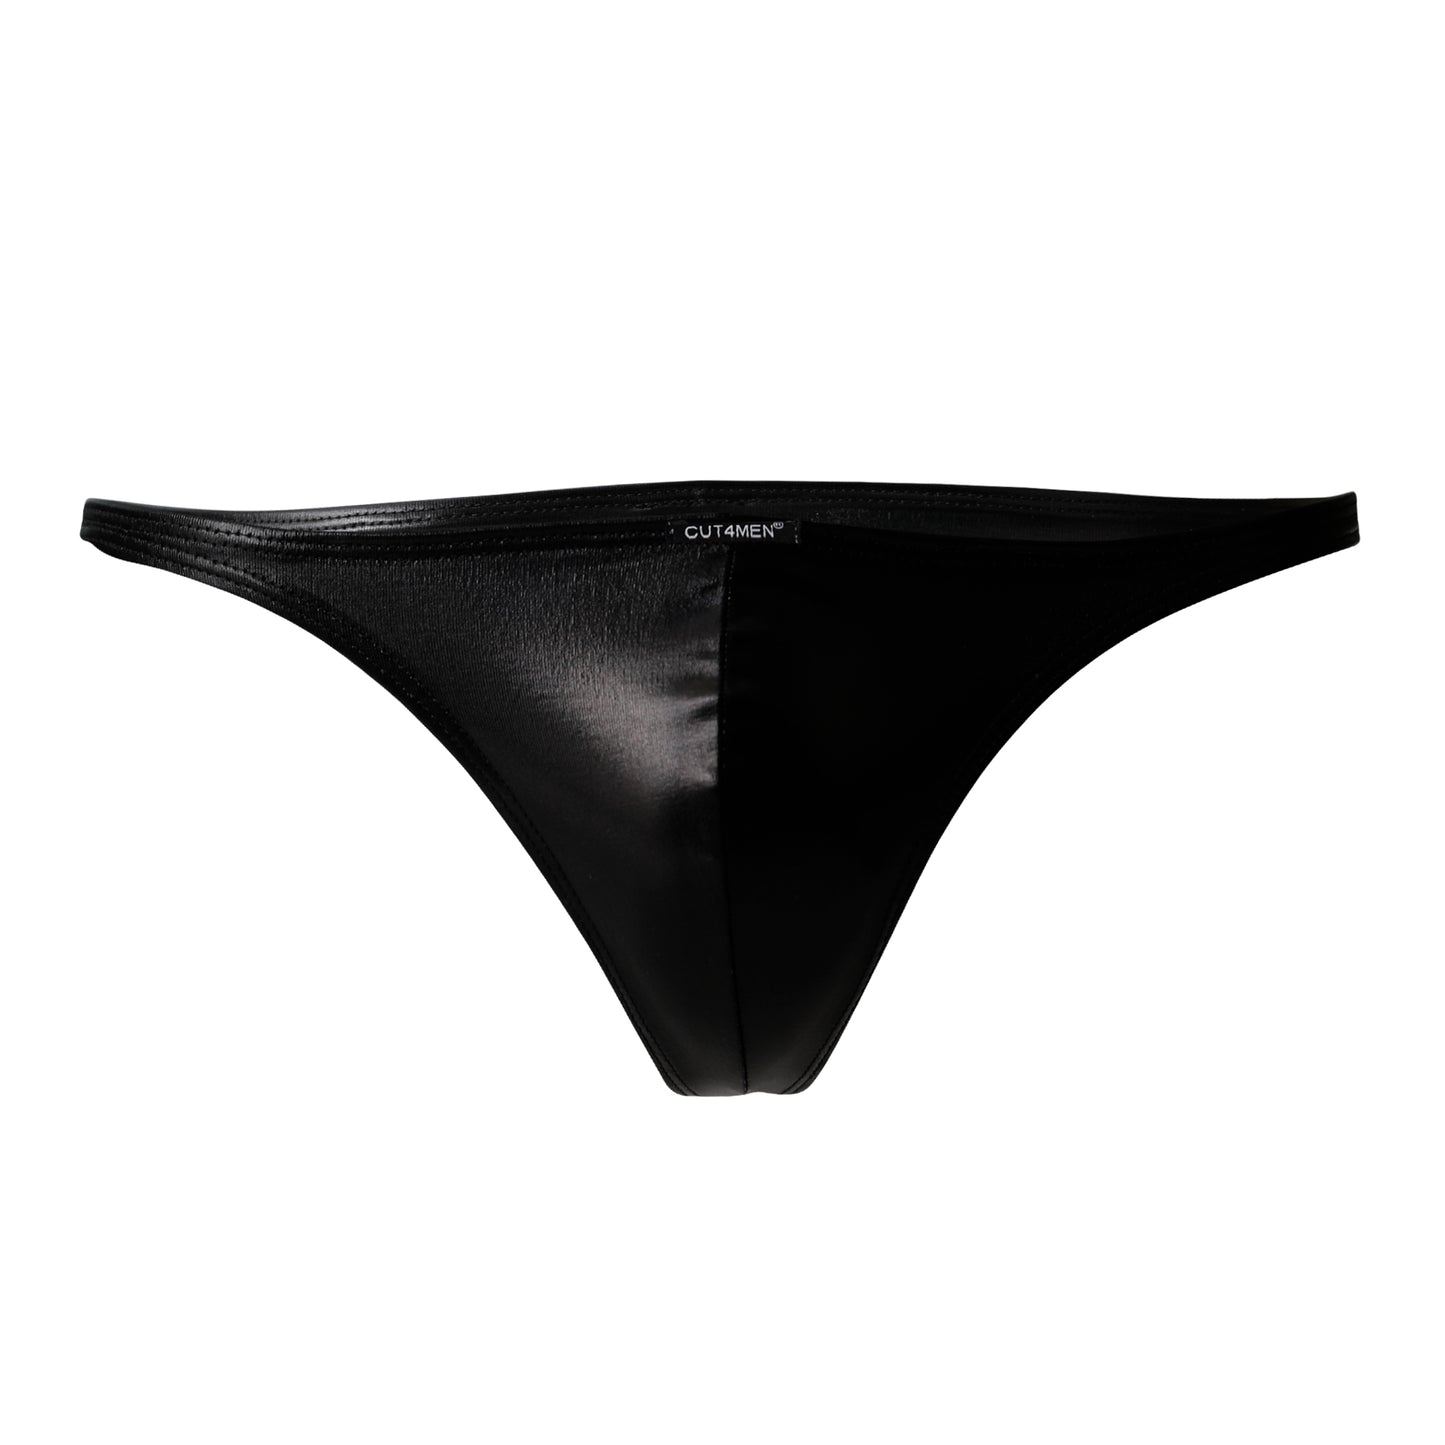 CUT4MEN - C4M11 - Wetlook Brazilian Brief Men Underwear - Black - 4 Sizes - 1 Piece